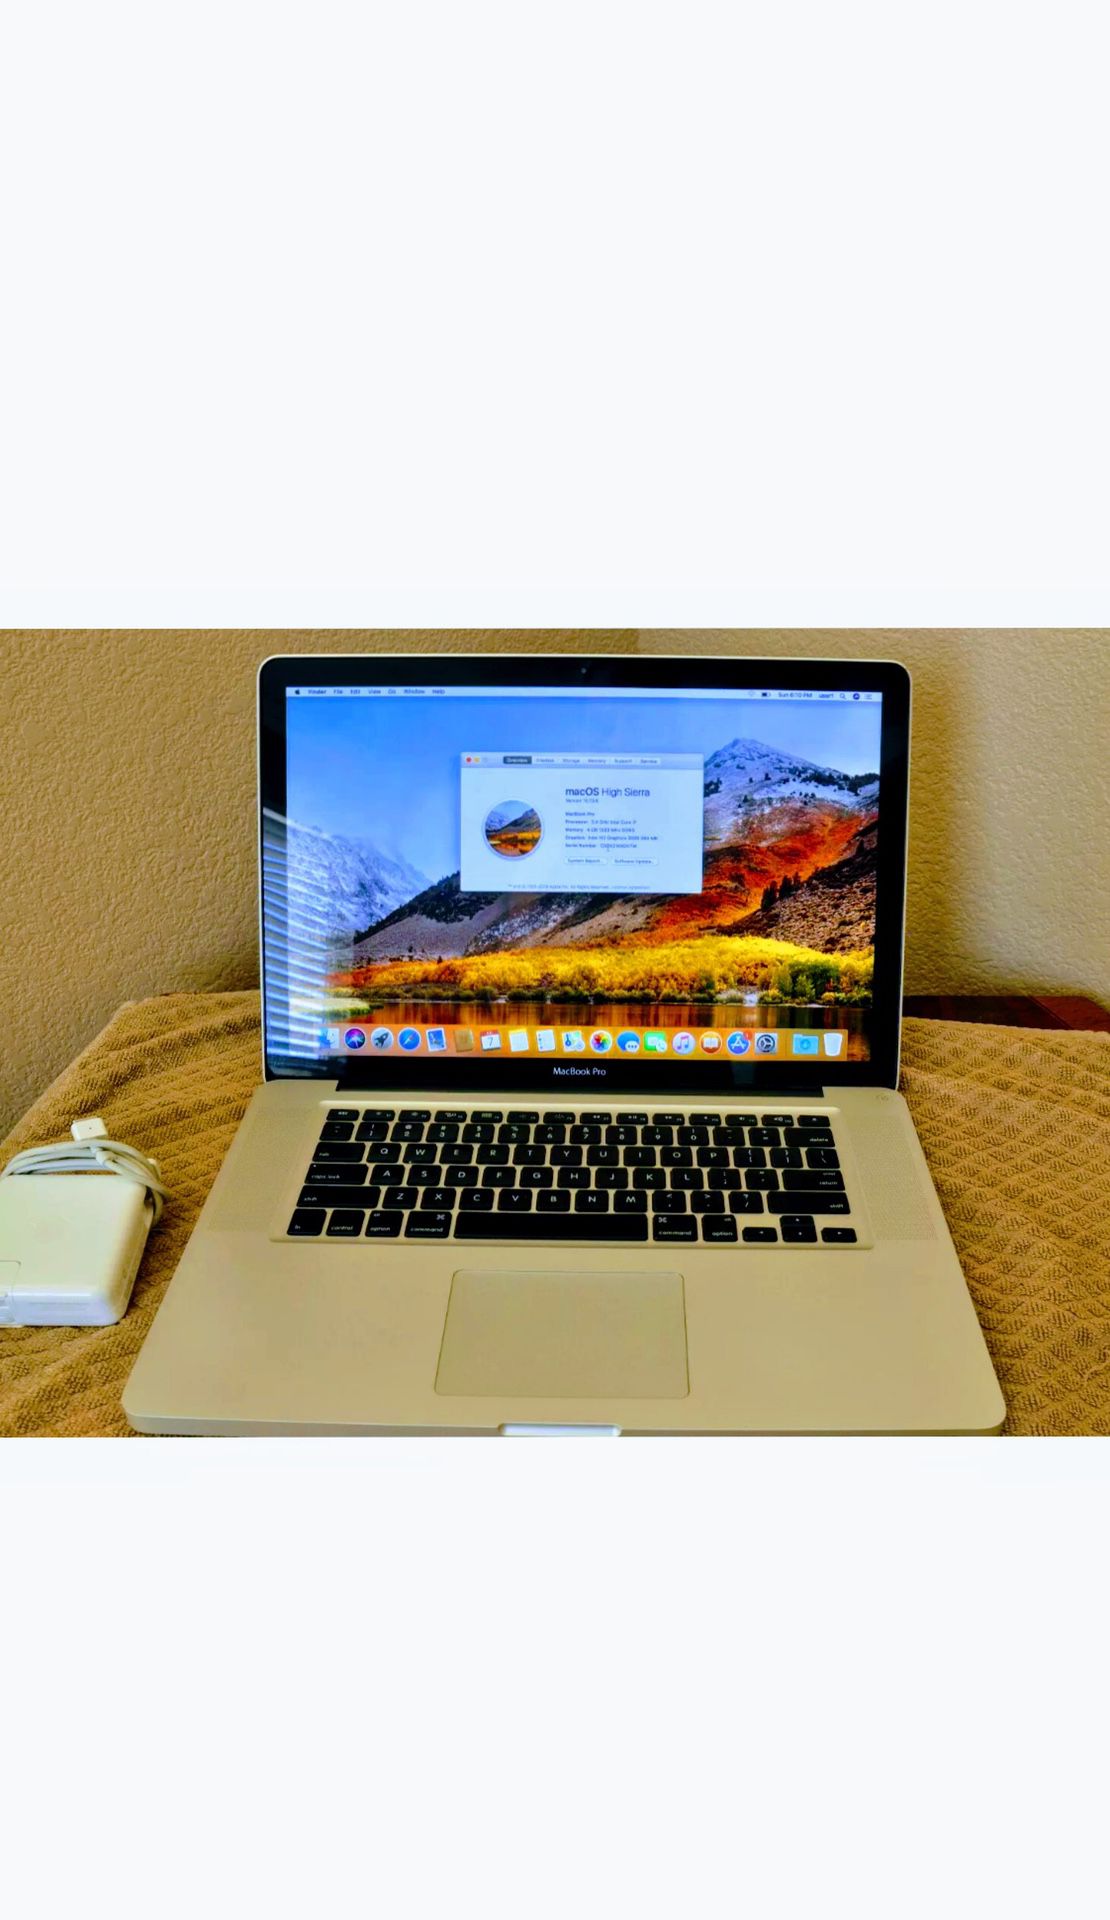 Apple MacBook Pro A1286, Intel Core i7, 2.4 GHz, 4 GB DDR3 RAM, 750 GB